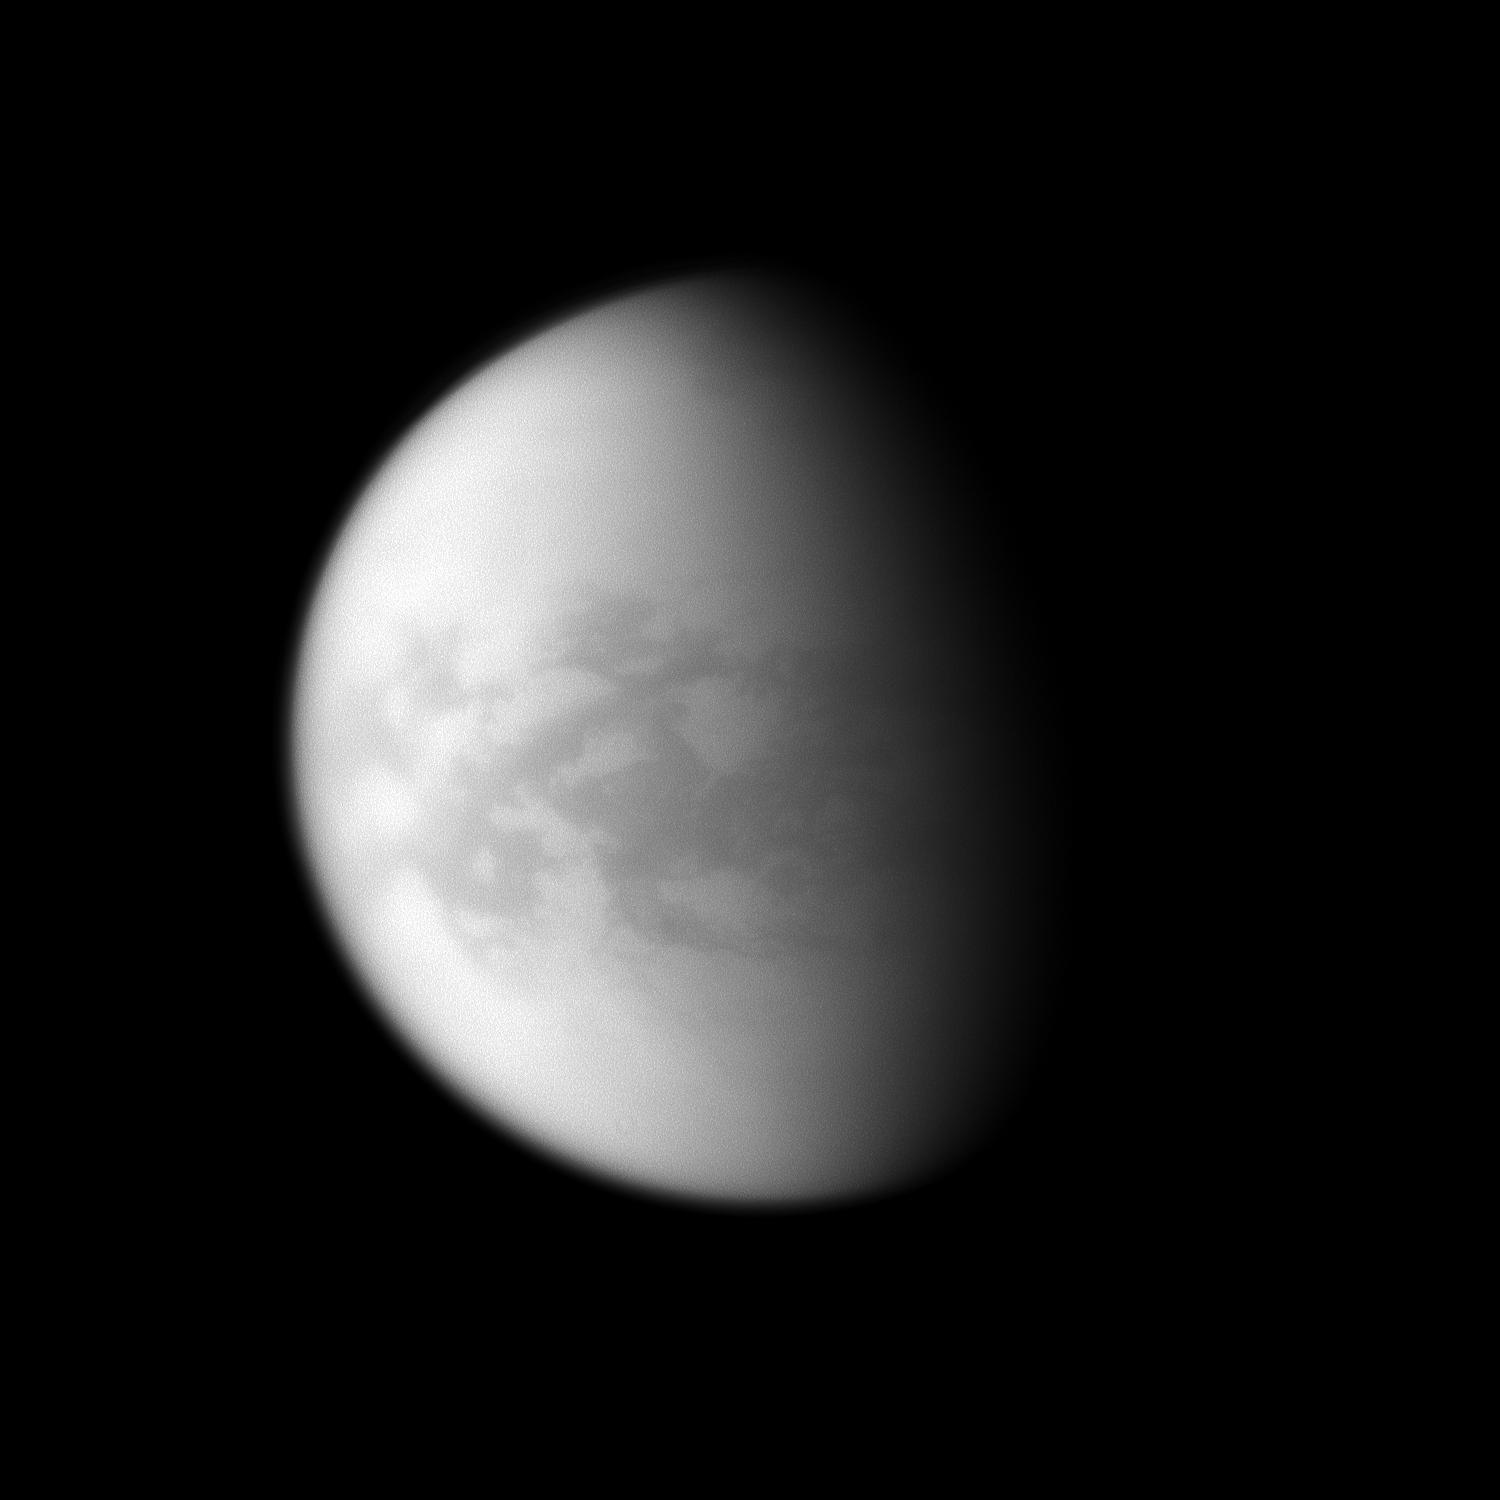 The Cassini spacecraft examines the dark region of Senkyo on Saturn's largest moon, Titan.